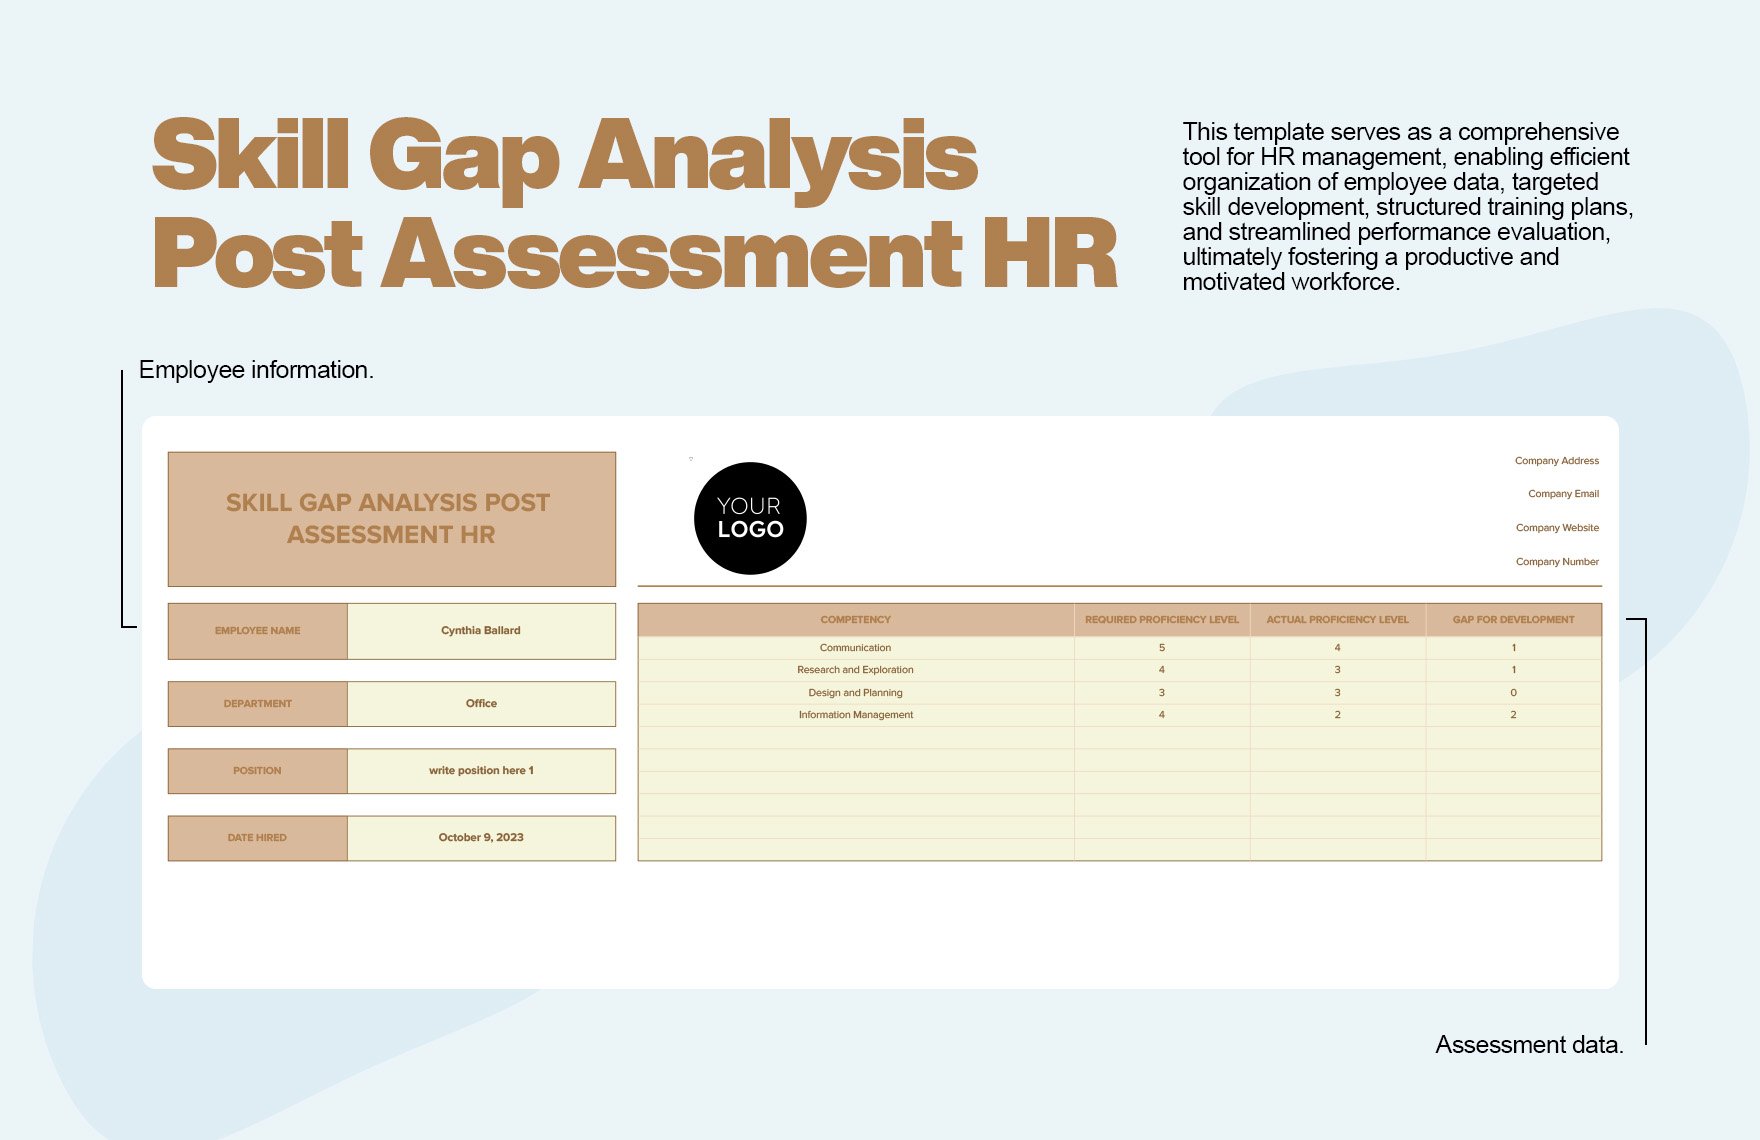 Skill Gap Analysis Post Assessment HR Template